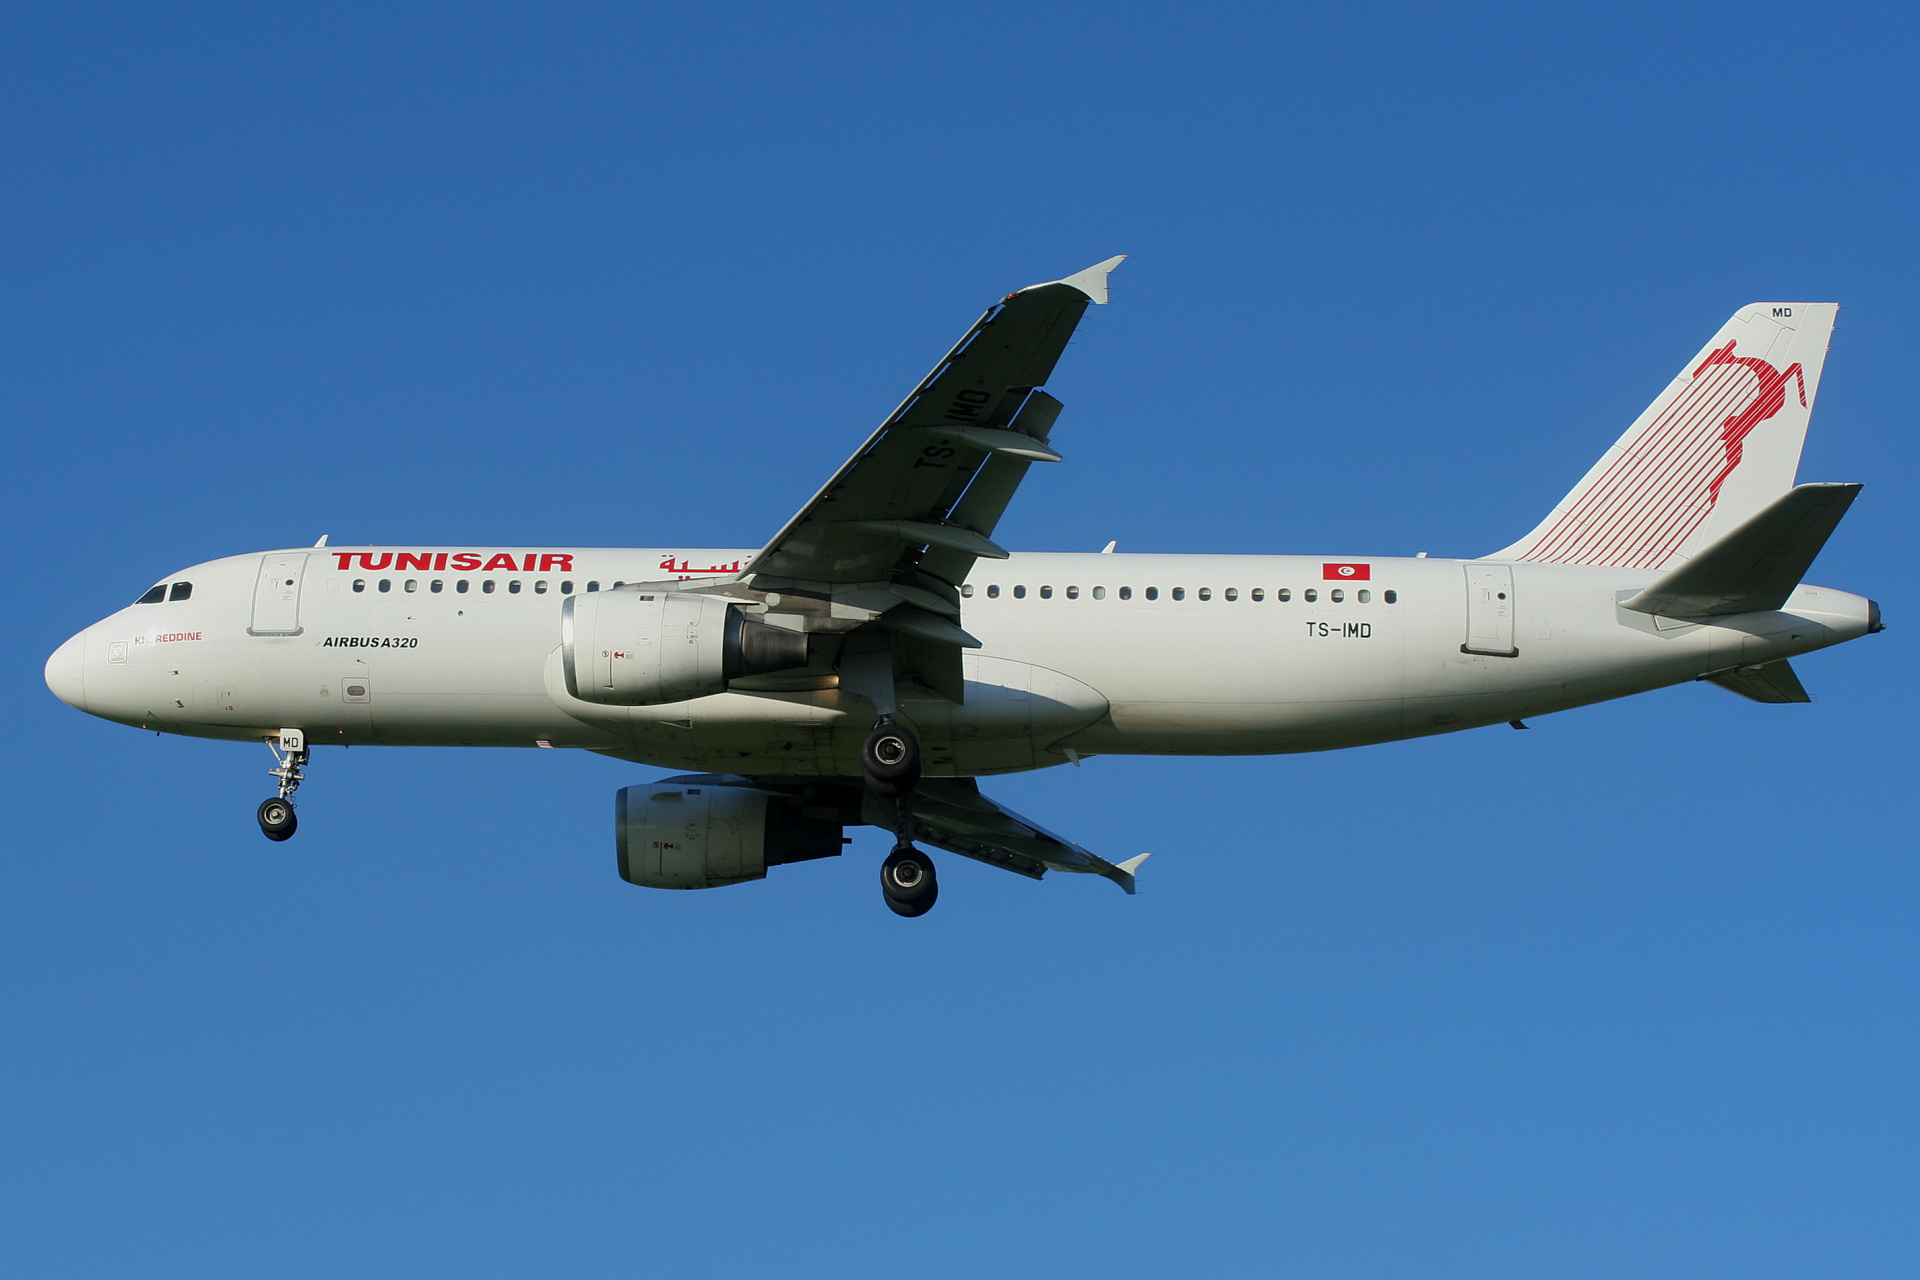 TS-IMD, TunisAir (Aircraft » EPWA Spotting » Airbus A320-200)